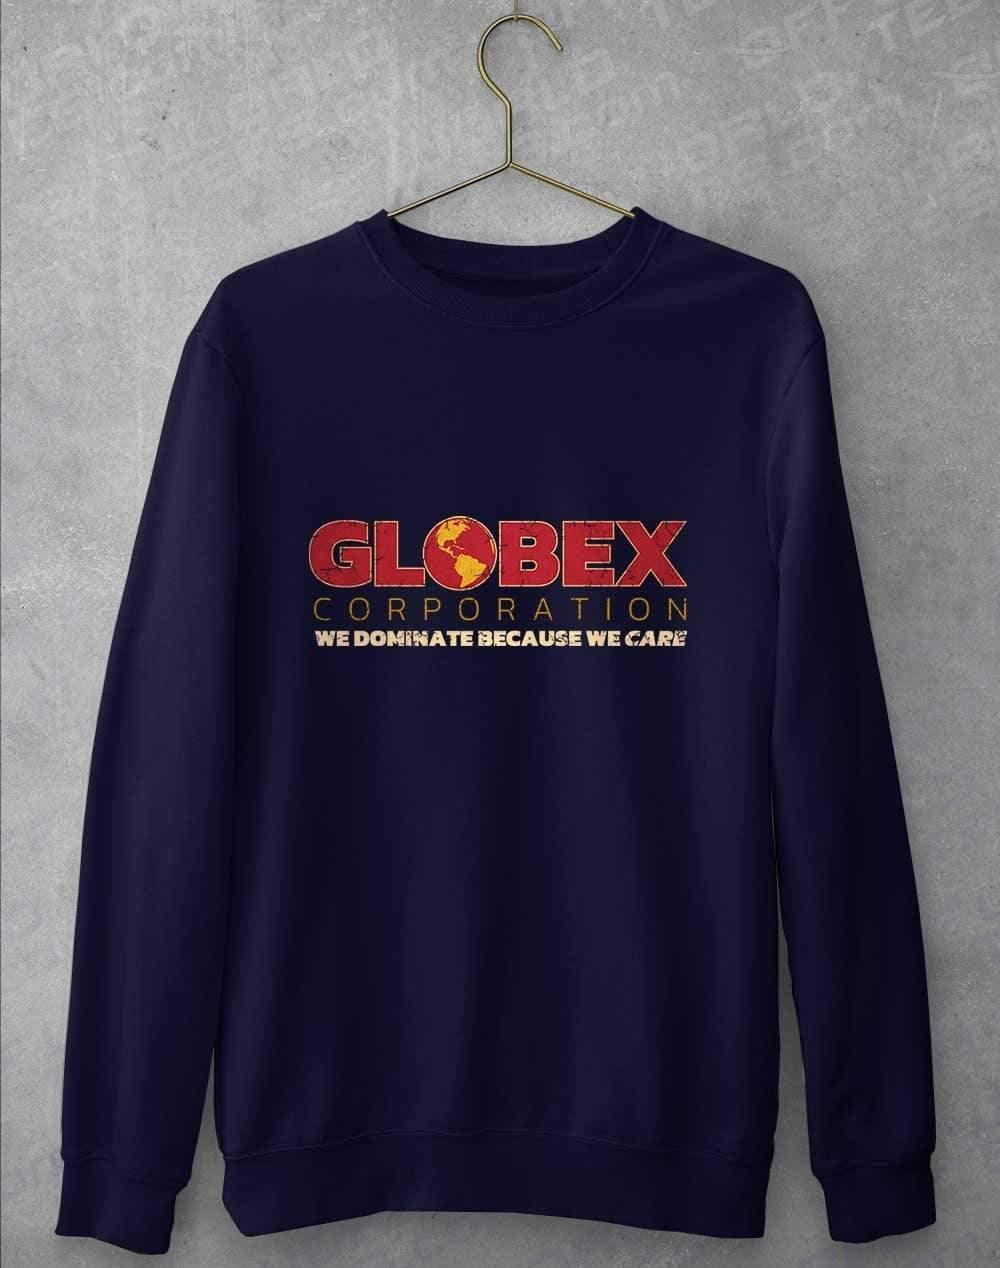 Globex Corporation Sweatshirt S / Oxford Navy  - Off World Tees